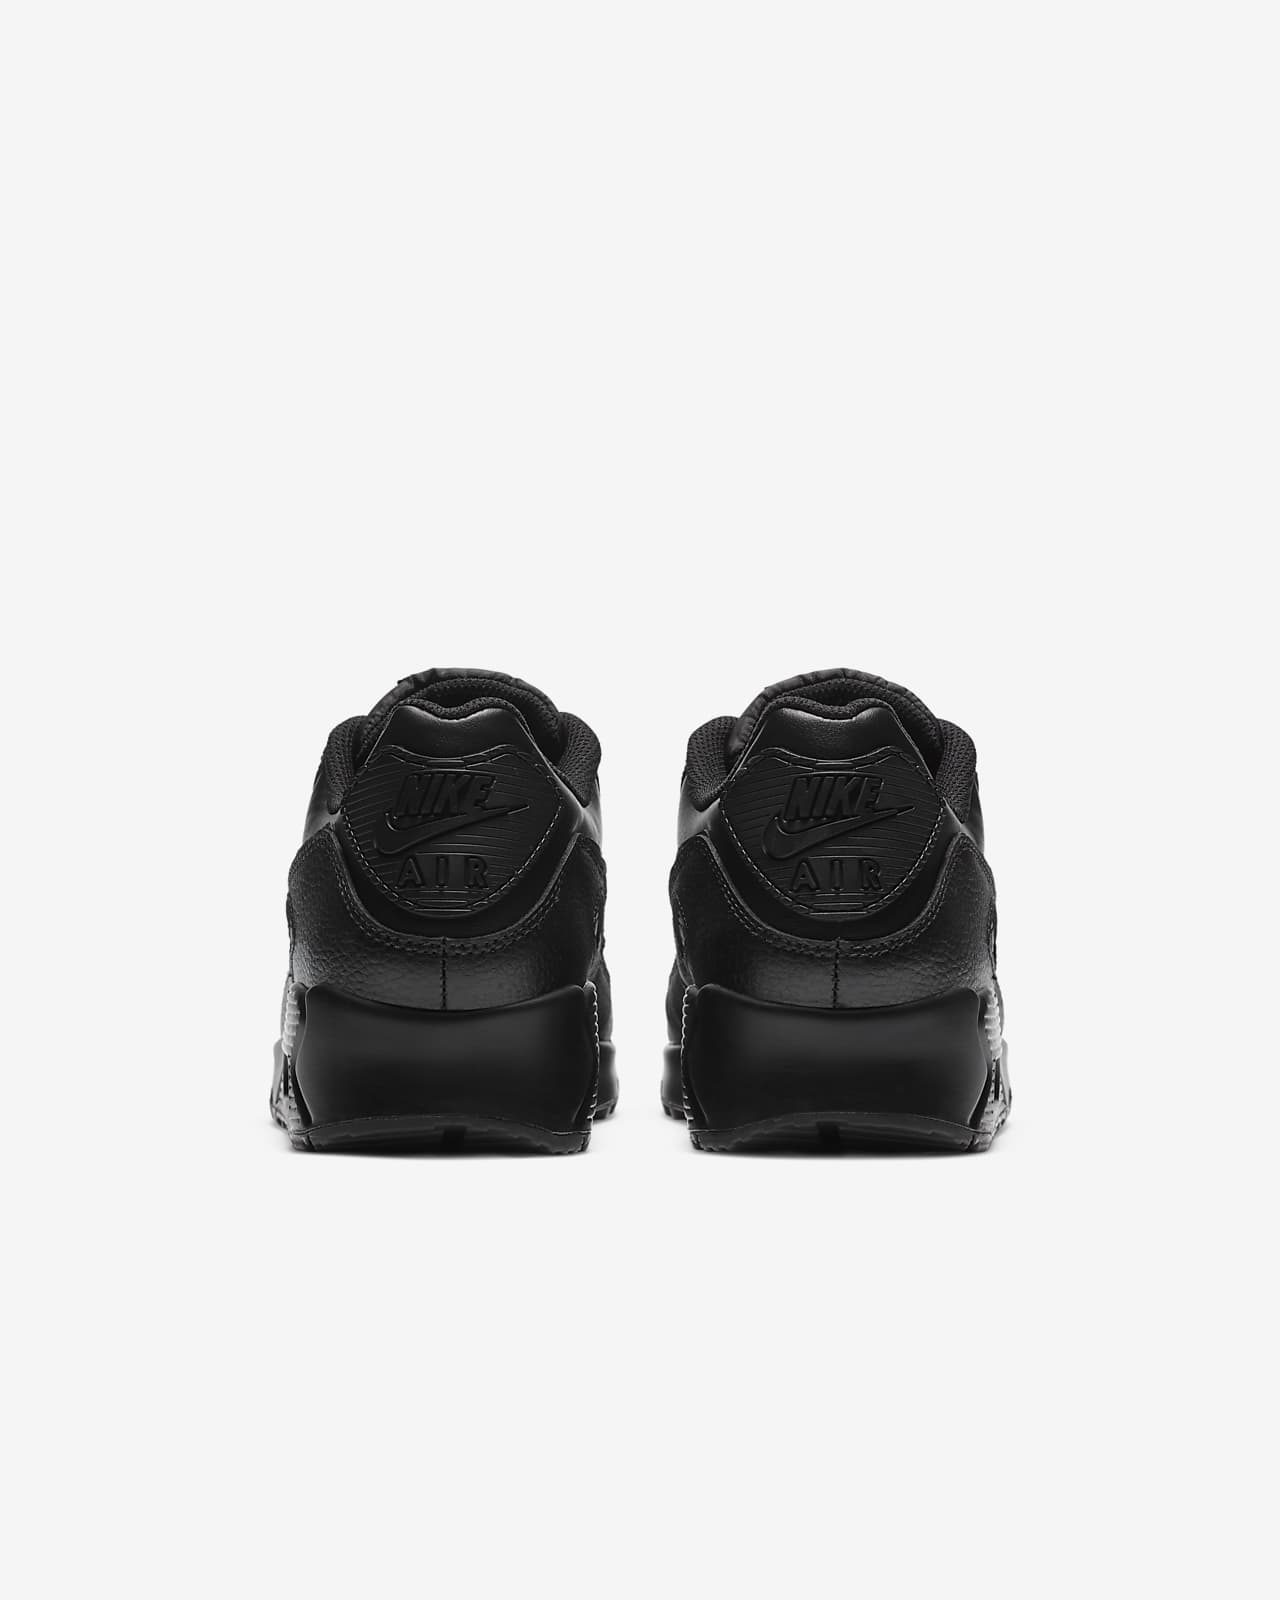 Air Max 90 LTR Men's Shoe. Nike ZA